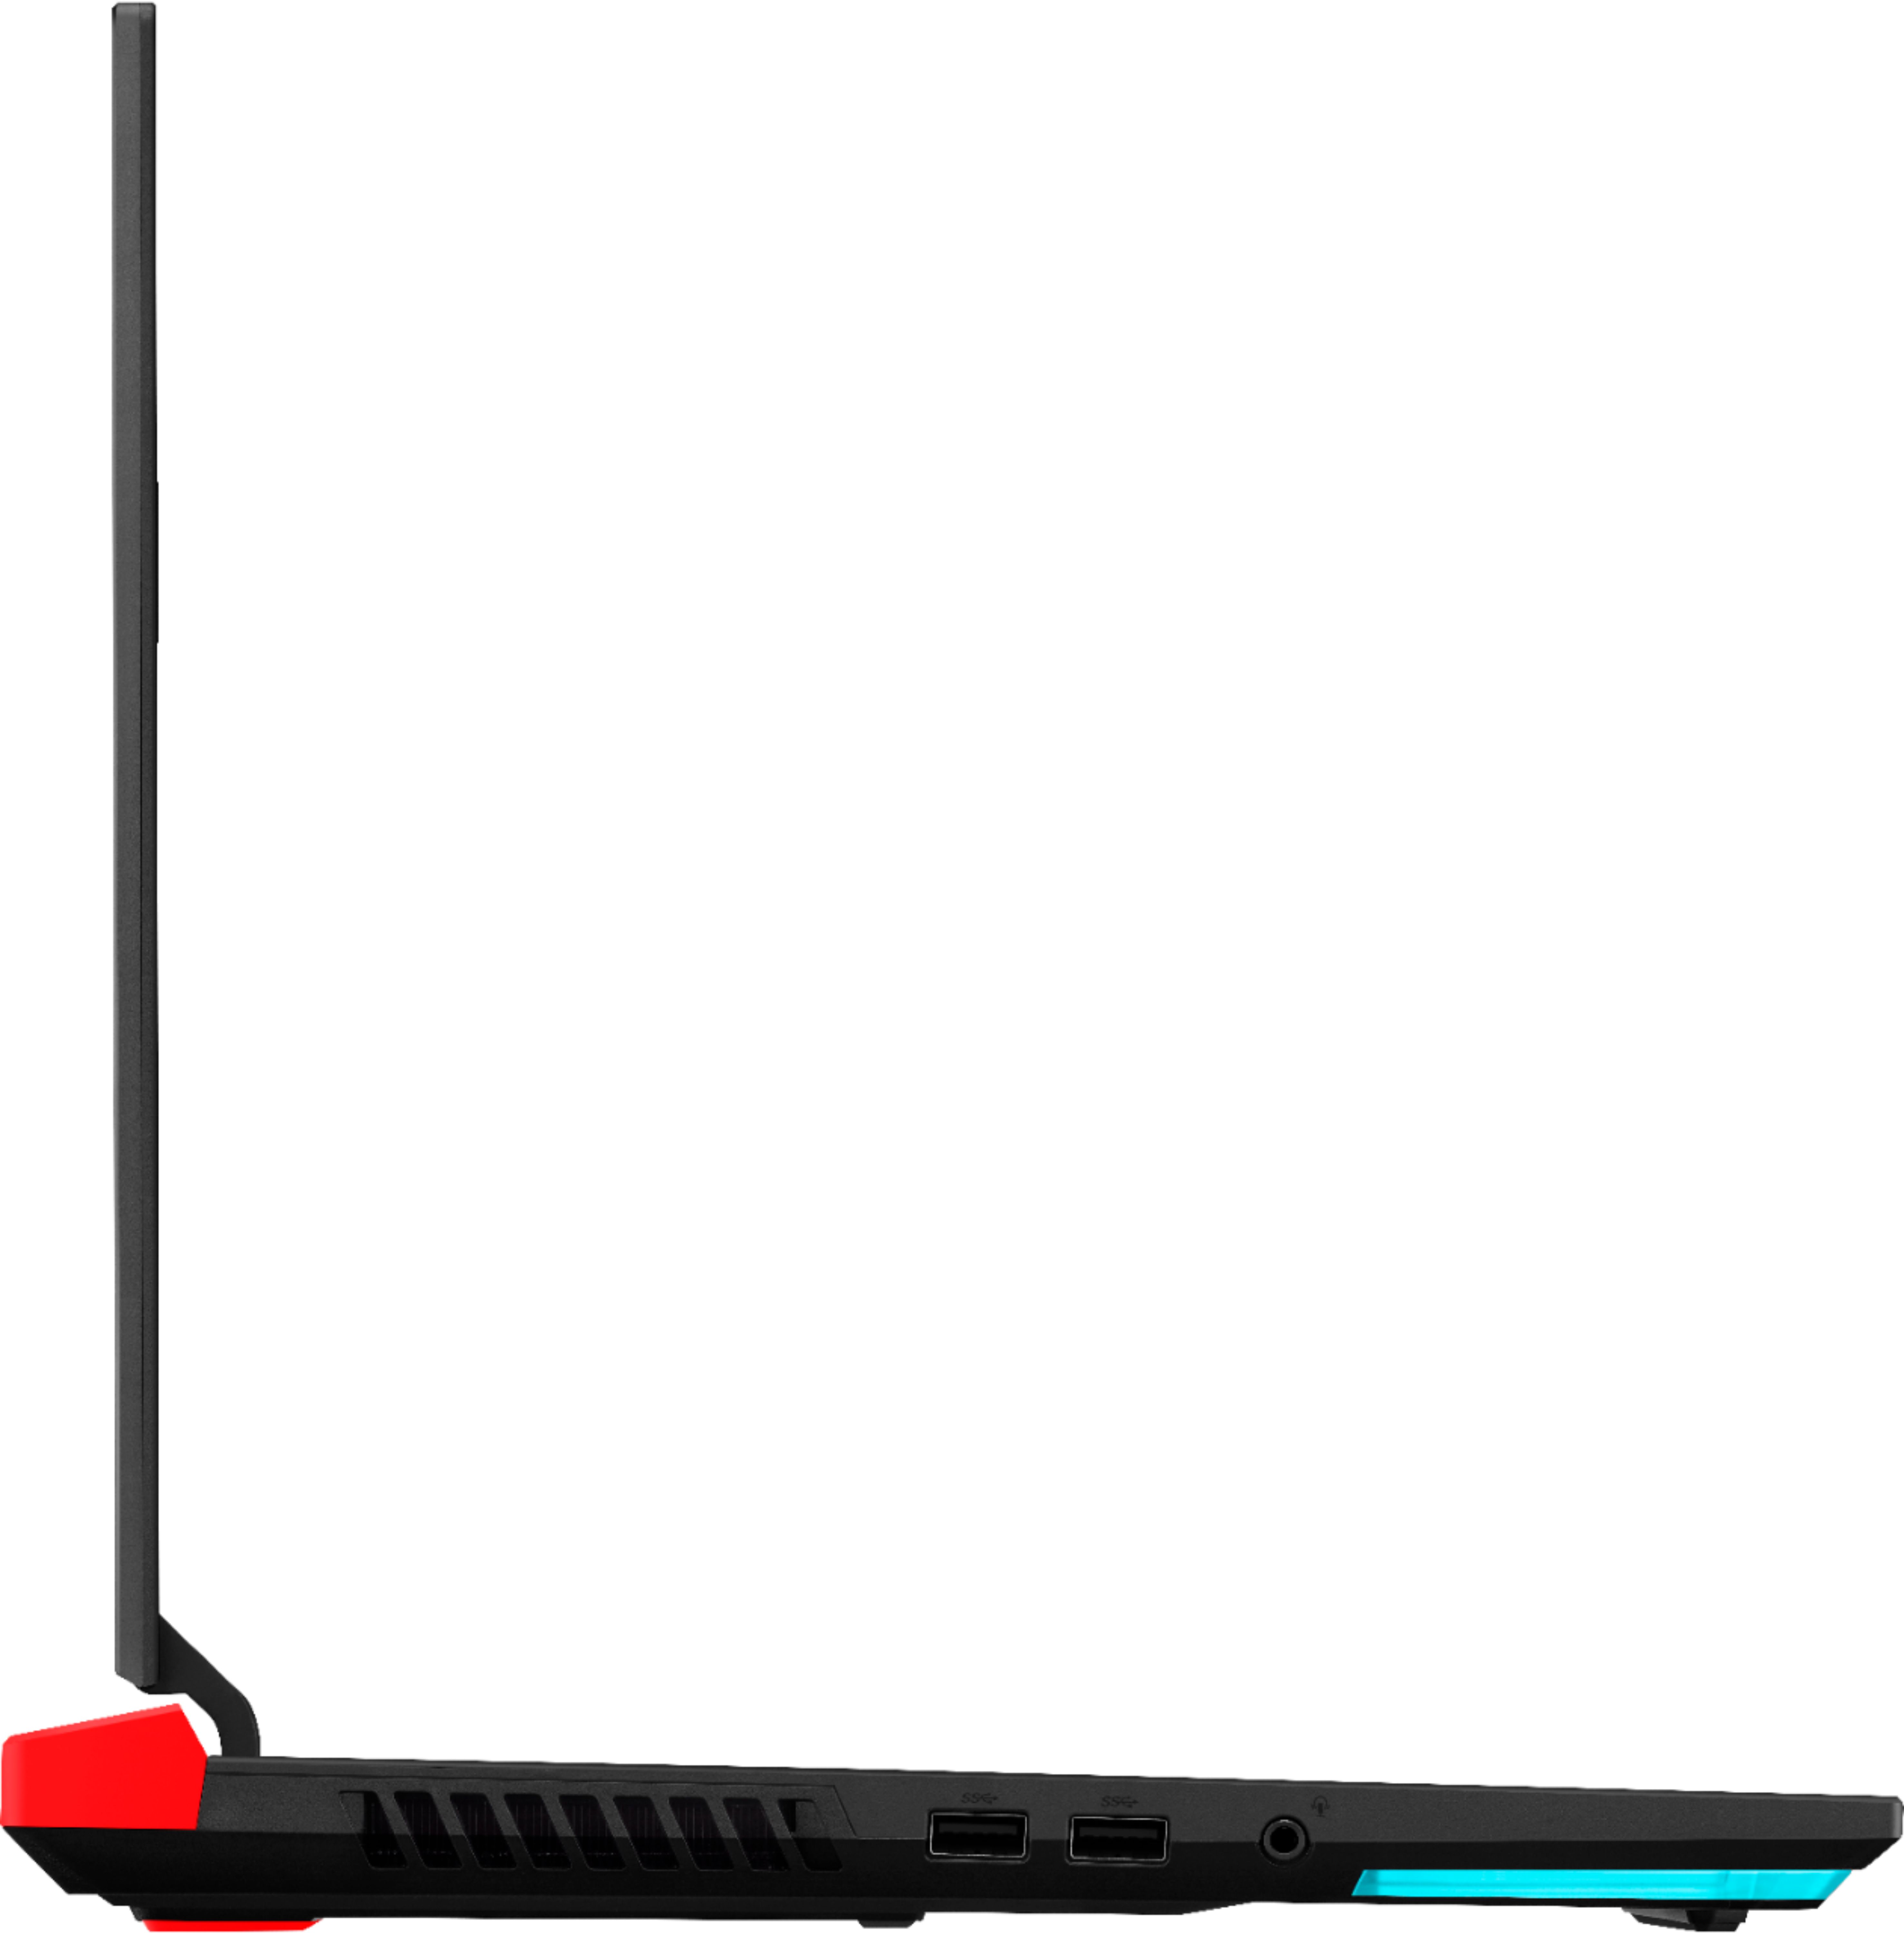 2021 ROG Strix G15 Advantage Edition, Laptops